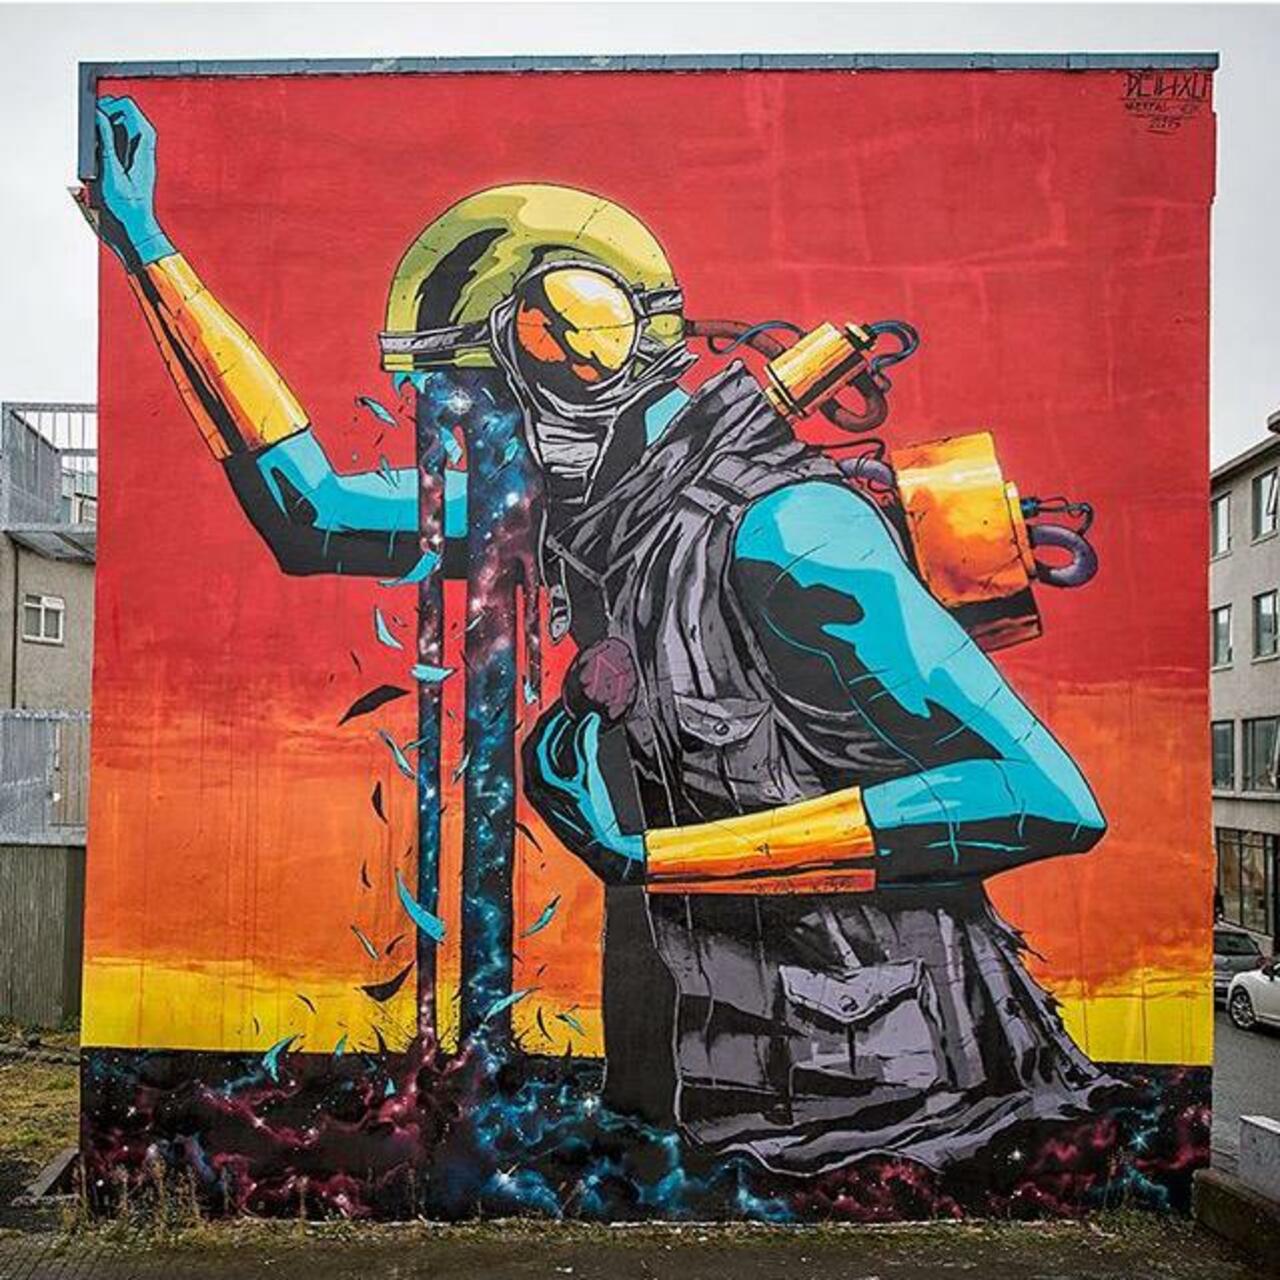 Street Art by Deih in Reykjavik 

#art #graffiti #mural #streetart https://t.co/M7sUeHNlDb